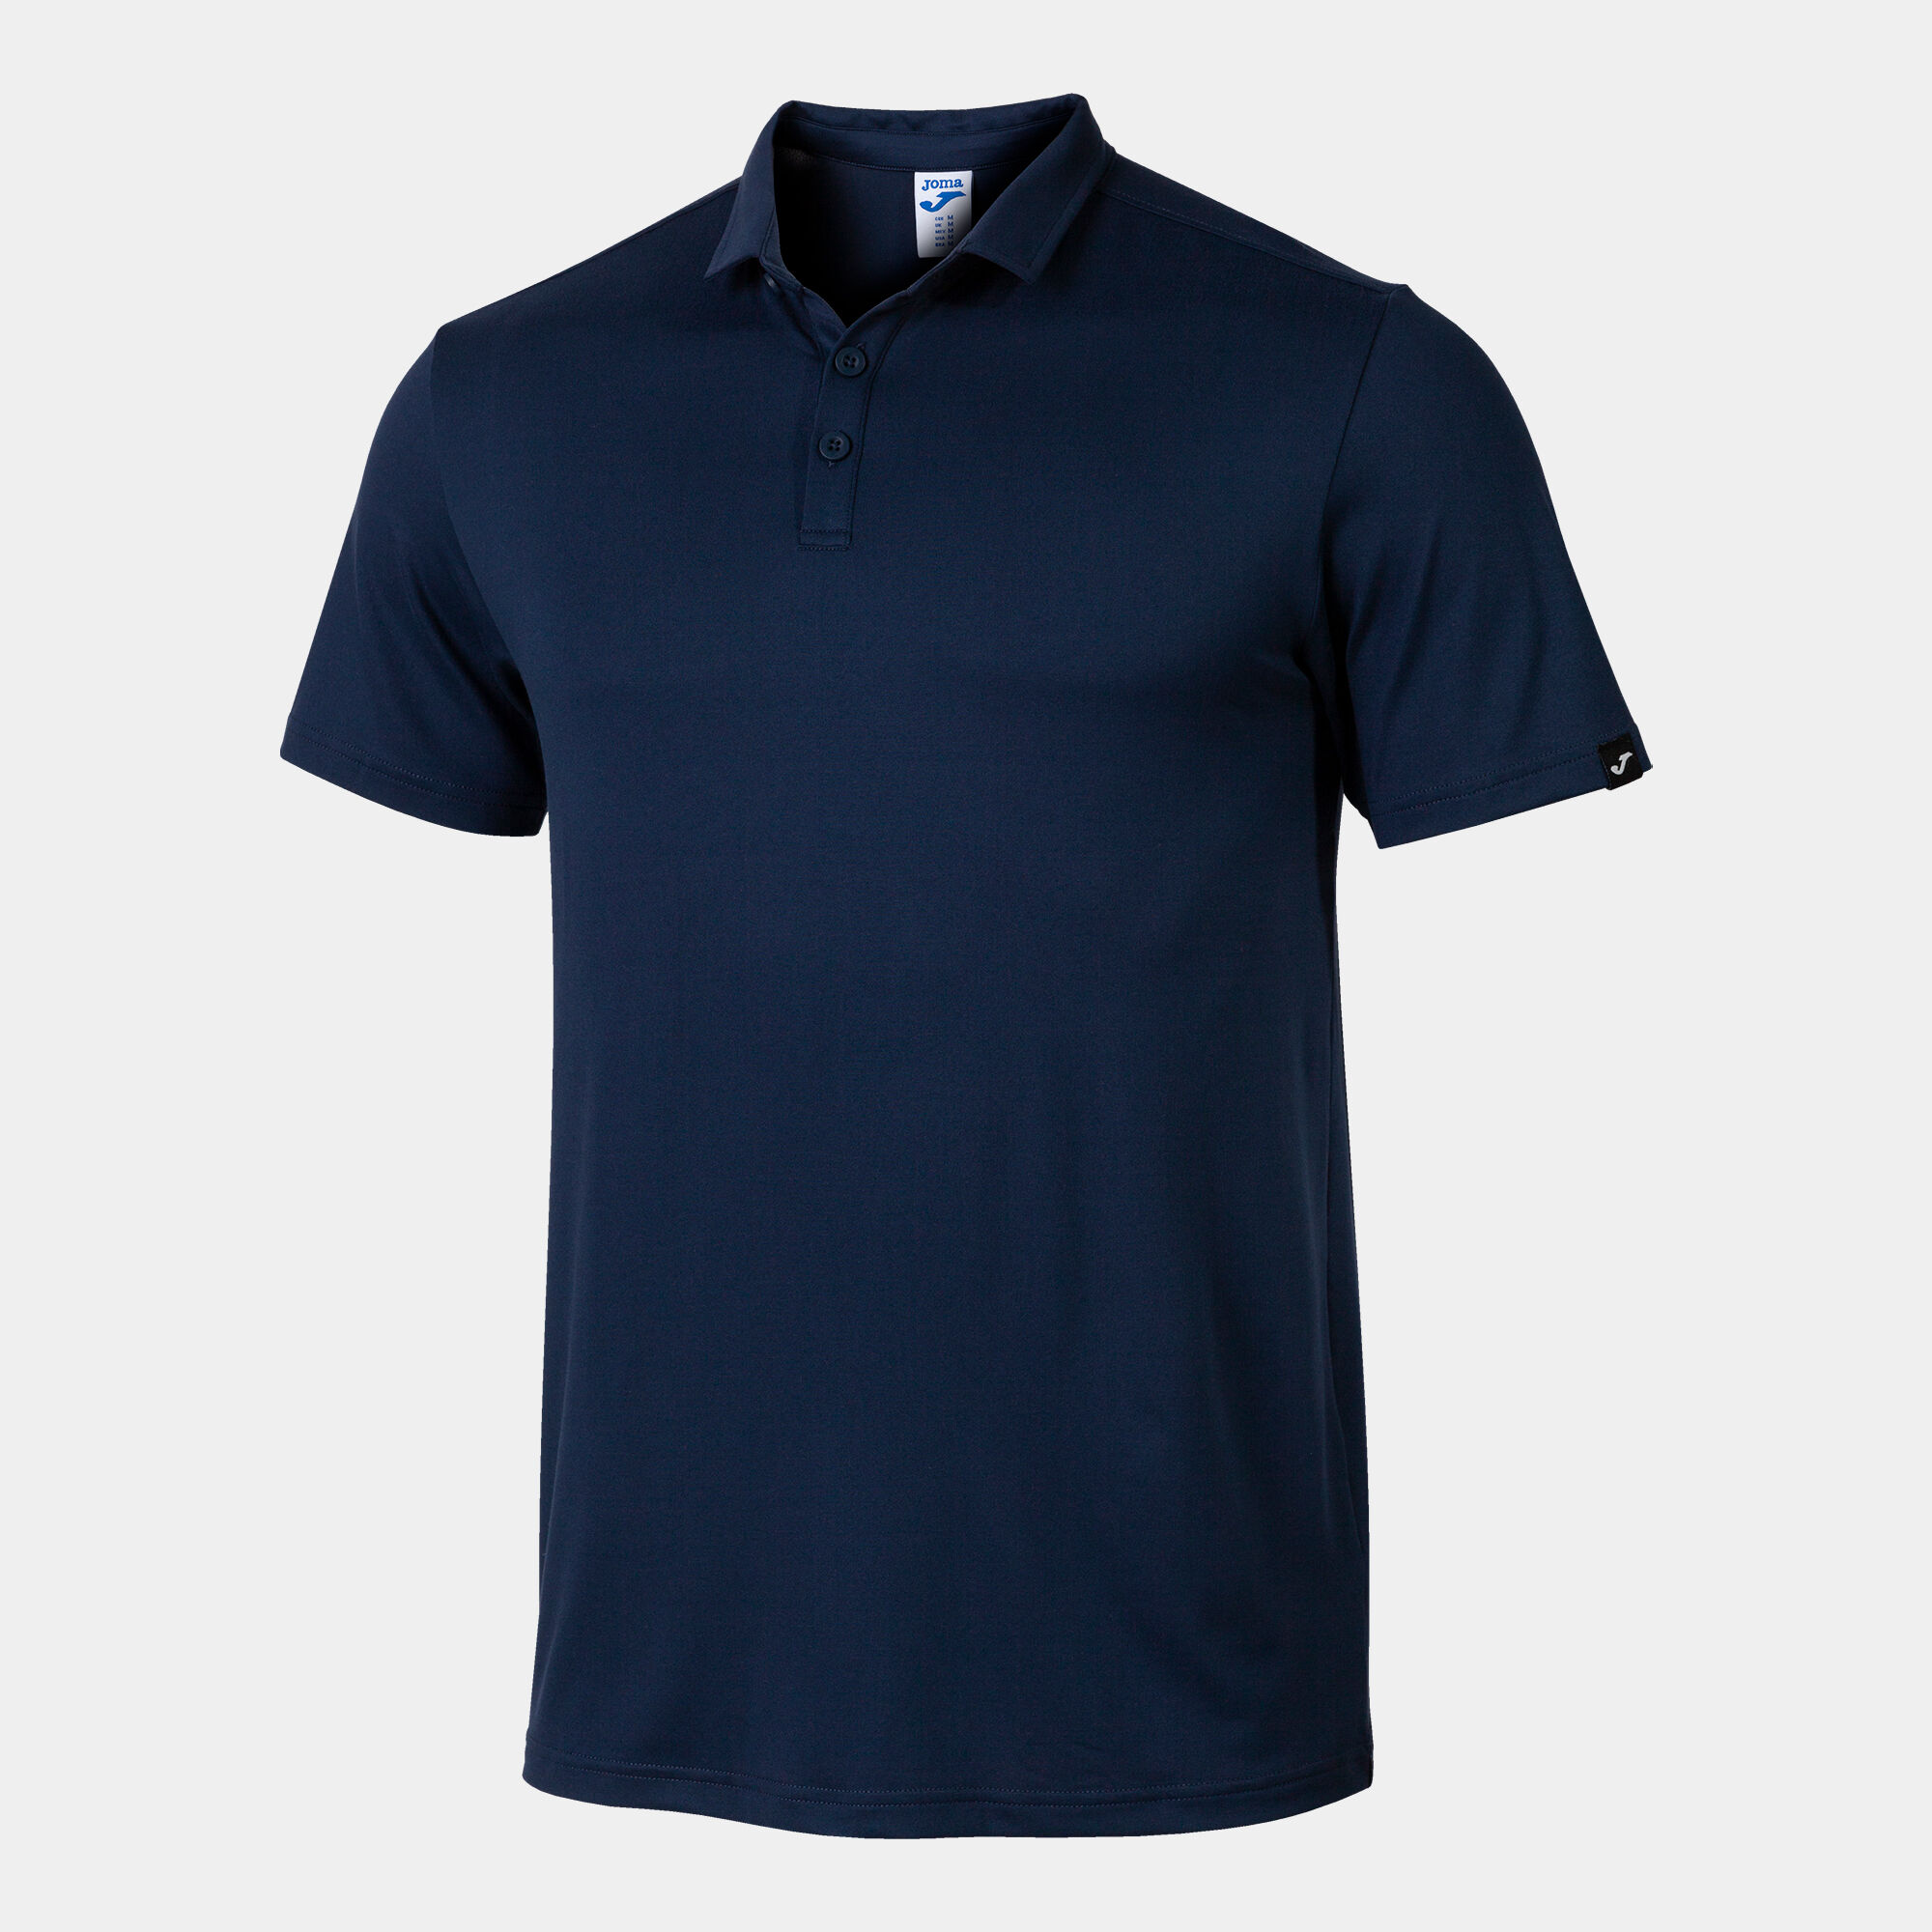 Polo shirt short-sleeve man Sydney navy blue